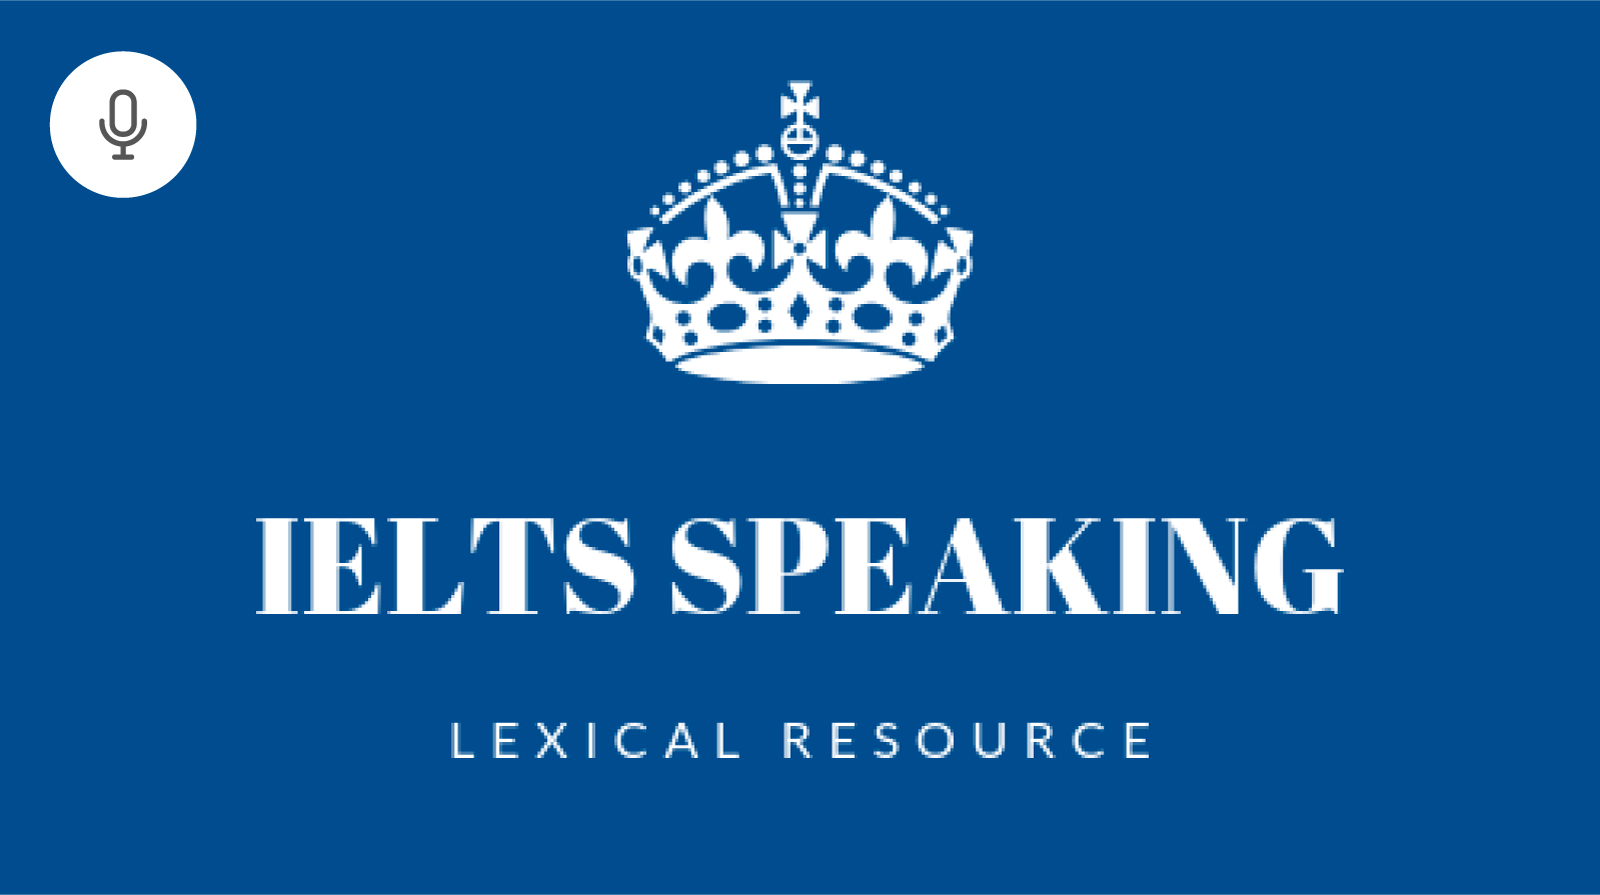 Tiêu chí chấm điểm – Lexical resource (Vocab) trong IELTS Speaking